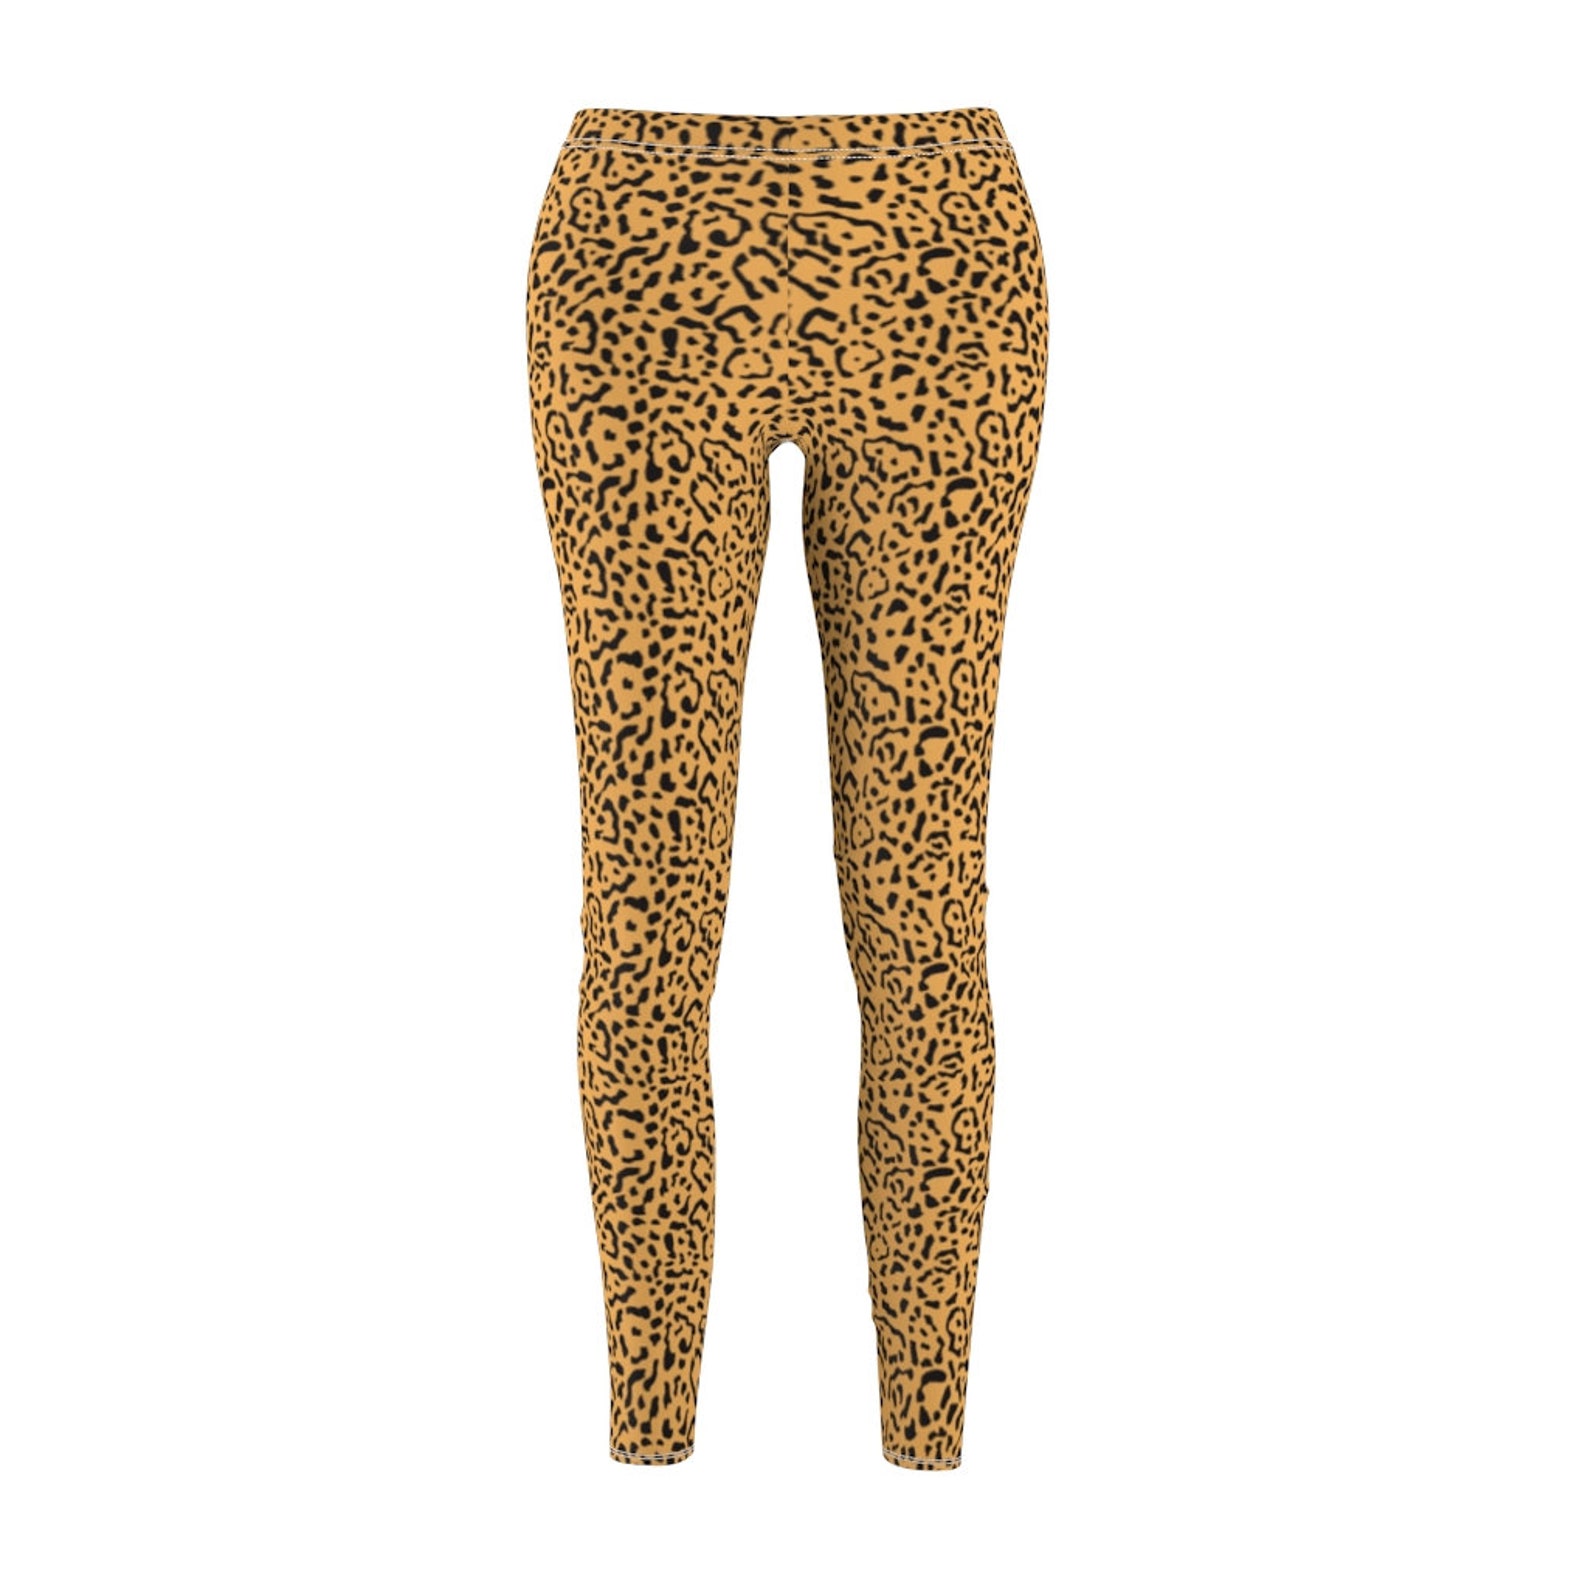 Cheetah Print Leggings Animal Print Leggings Cheetah Stretch | Etsy